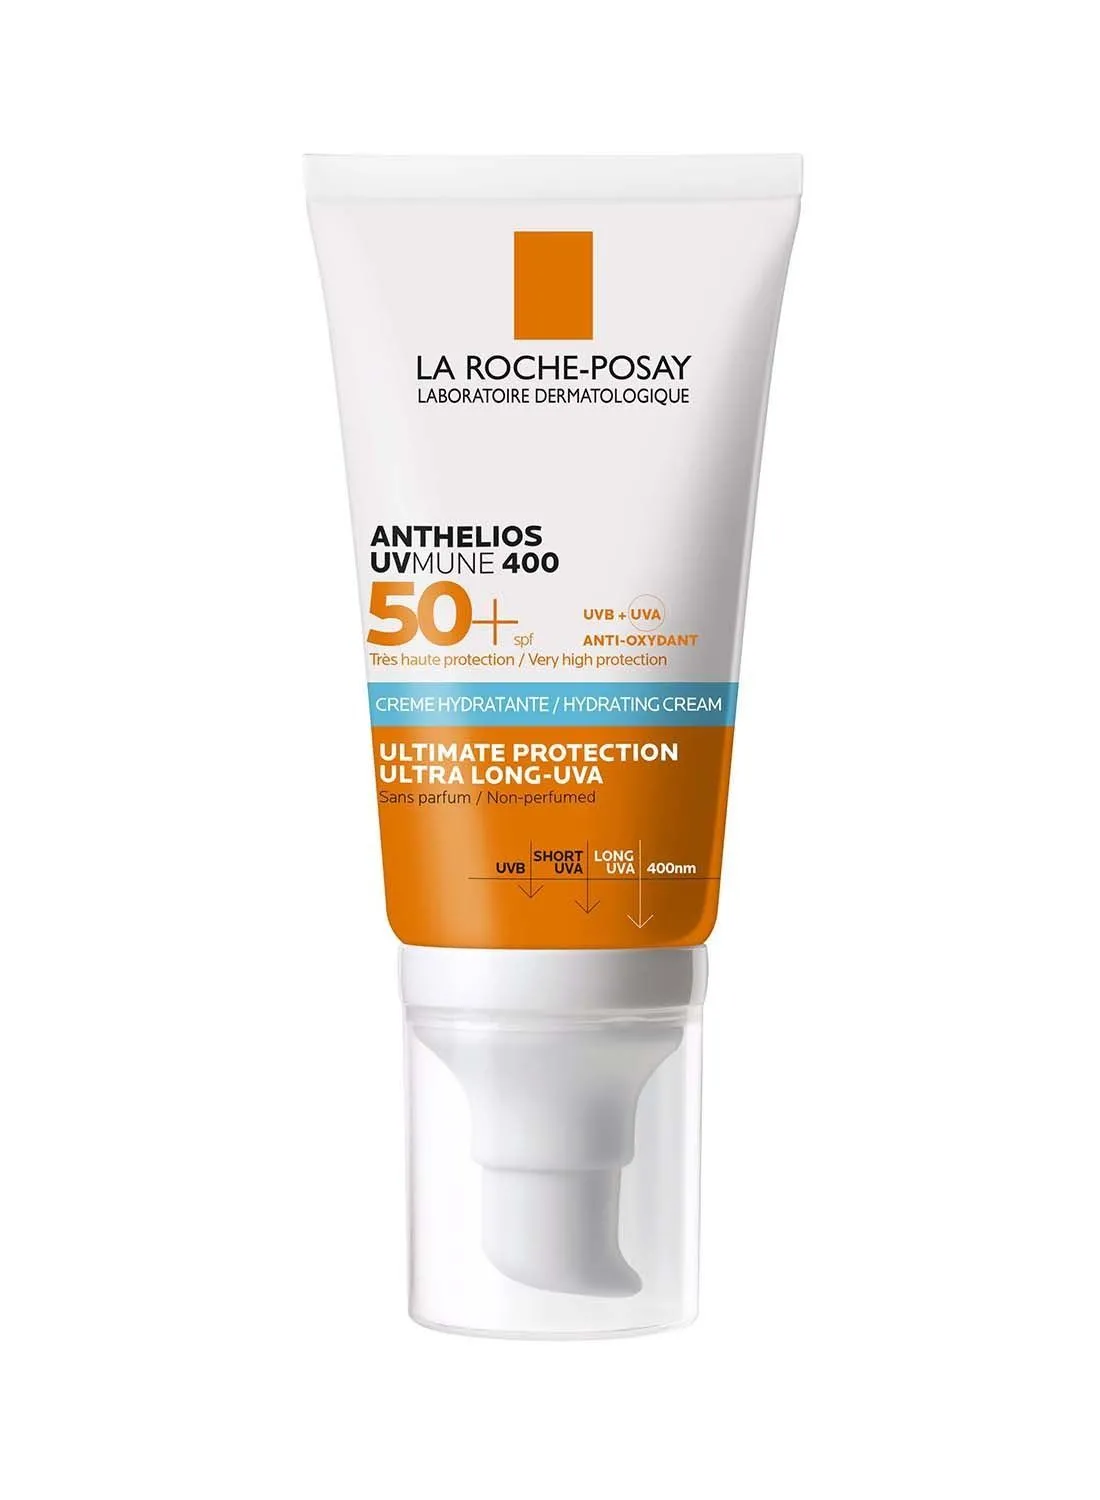 LA ROCHE-POSAY Posay Anthelios Uvmune 400 Moisturizing Sunscreen Spf50+ 50Ml